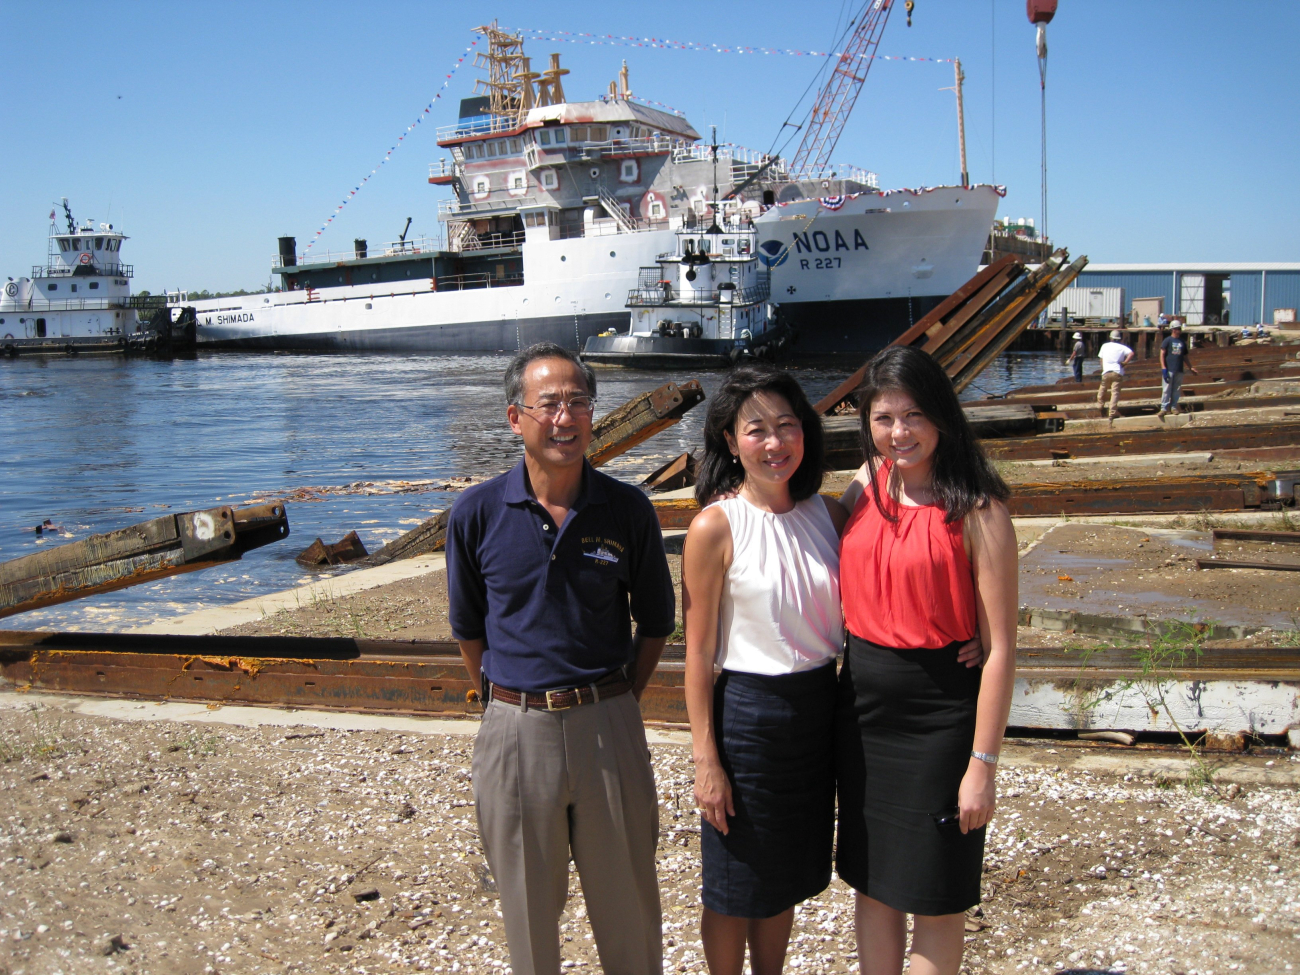 Allen Shimada, Mimi Shimada, and Allen's niece with the NOAA ShipBELL SHIMADA in the background